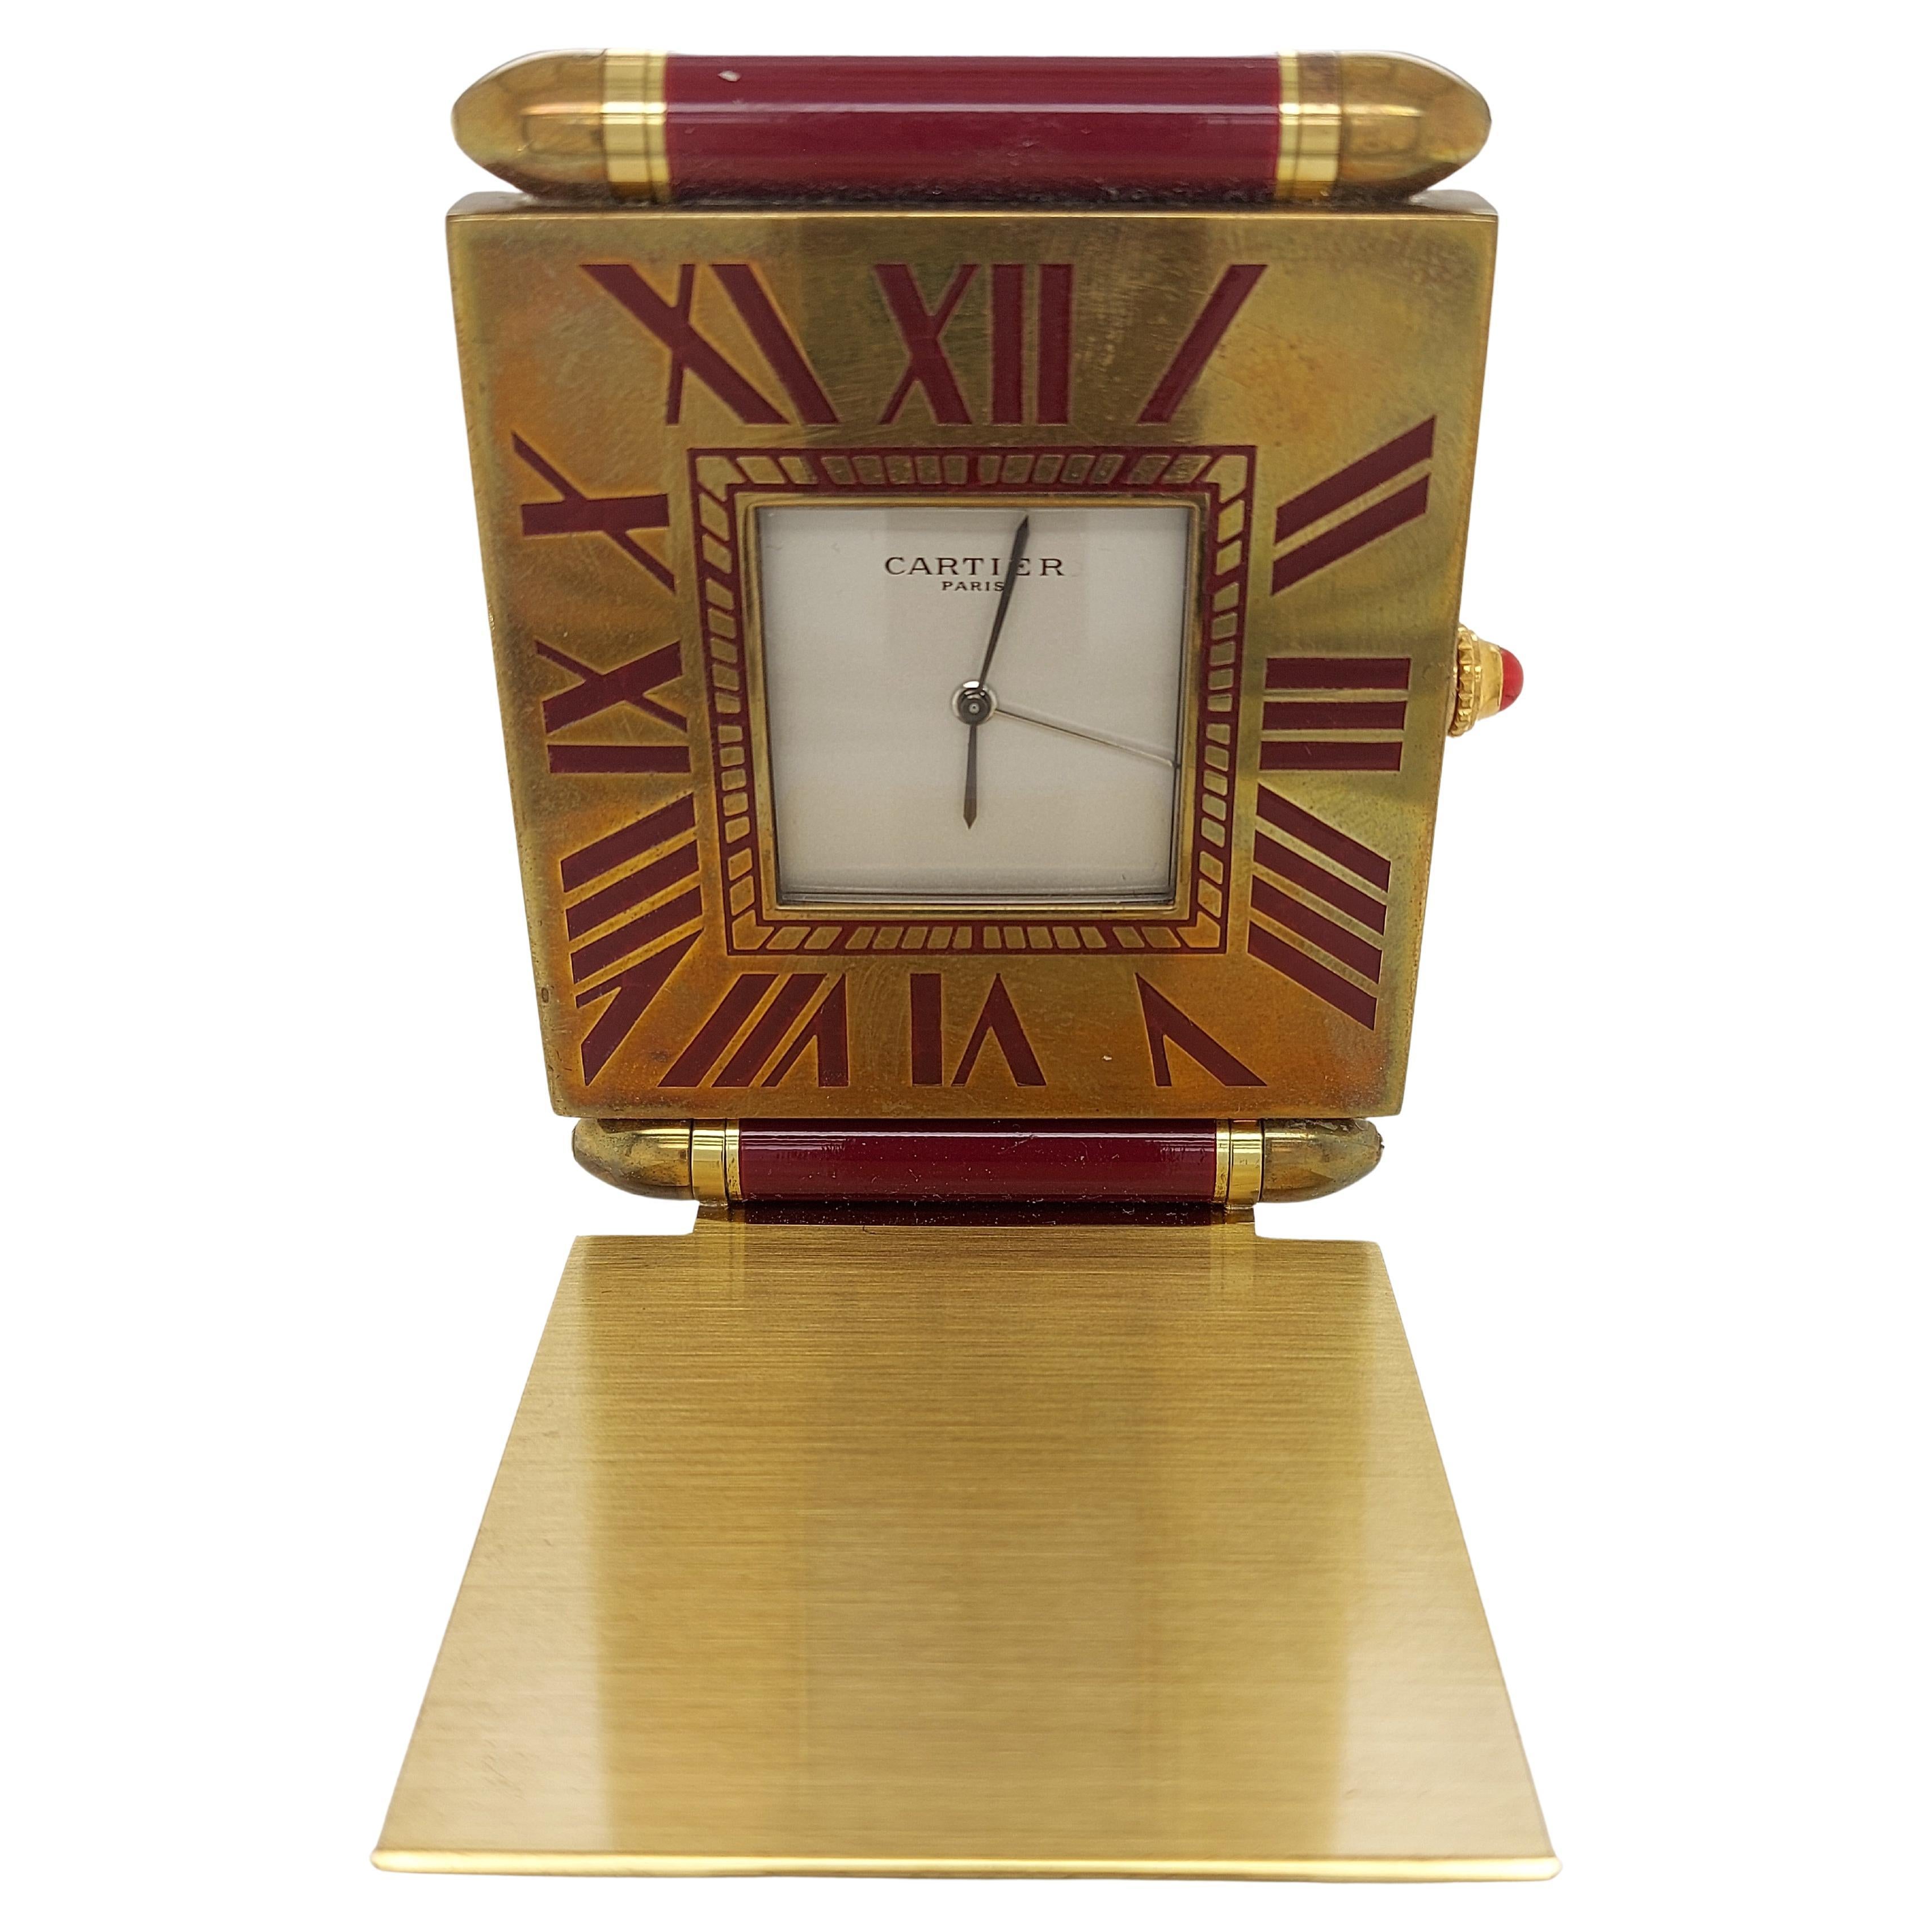 Cartier Paris, French Quartz Quadrant Traveling Alarm Clock



Movement: Quartz, Hand winding

Dial: Large white dial with Roman numerals

Case: Gilt metal case, height 65 mm x width: 50 mm x 10.4 mm

Total weight: 176.3 gram / 6.220 oz / 113.4 dwt